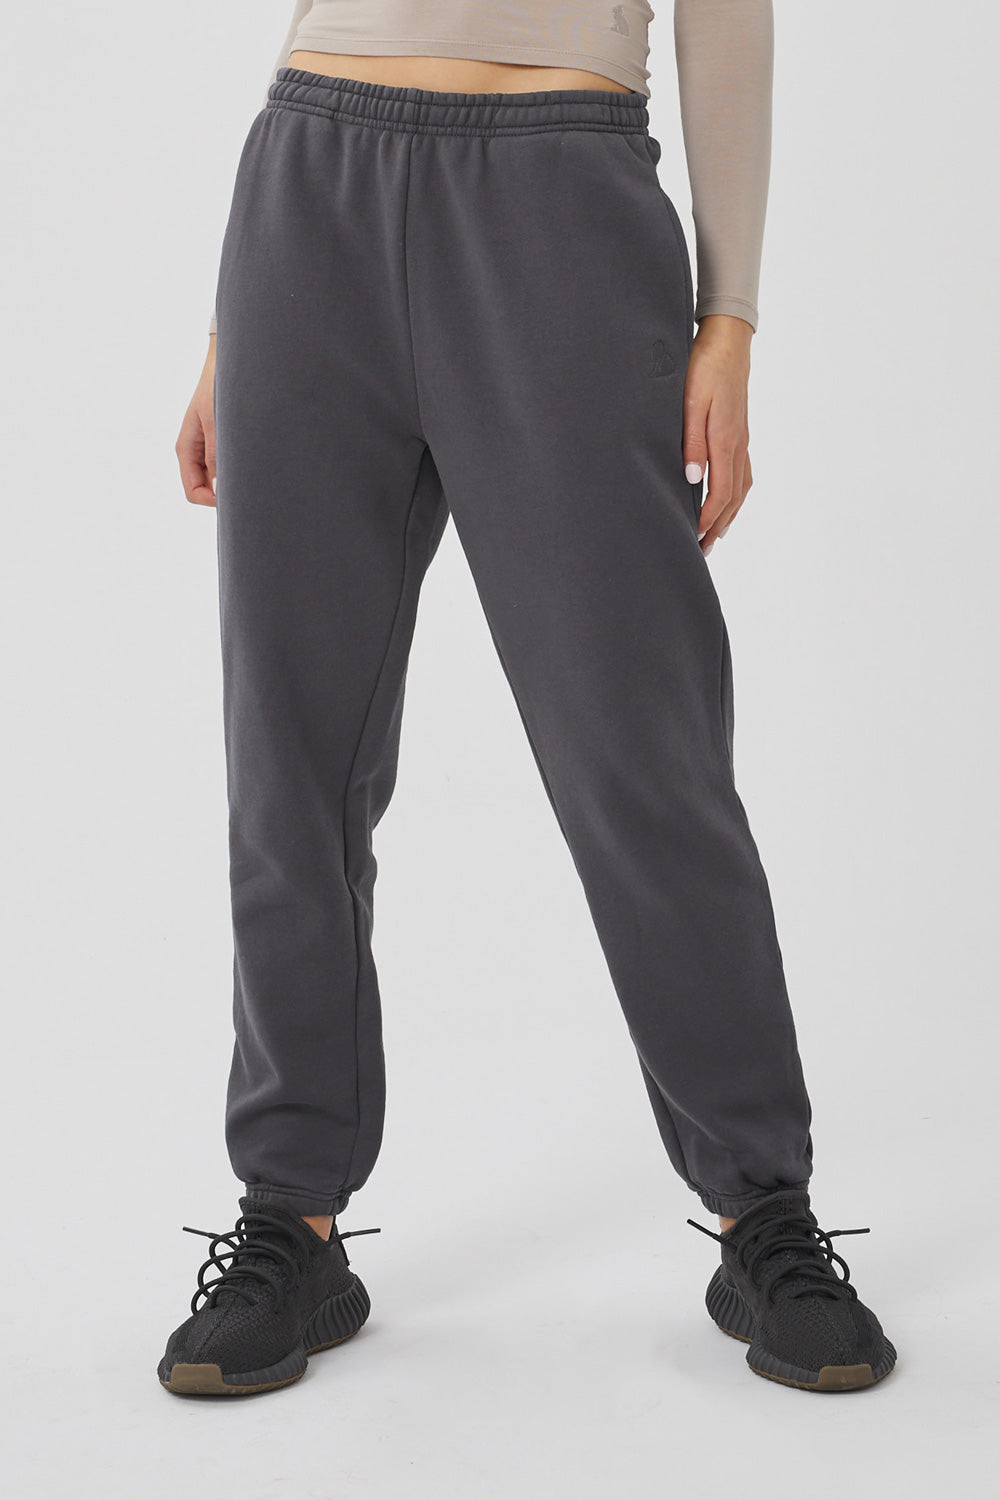 Kuwallatee Oversized Sweatpants Pants Grey - Legitkicks.ca 